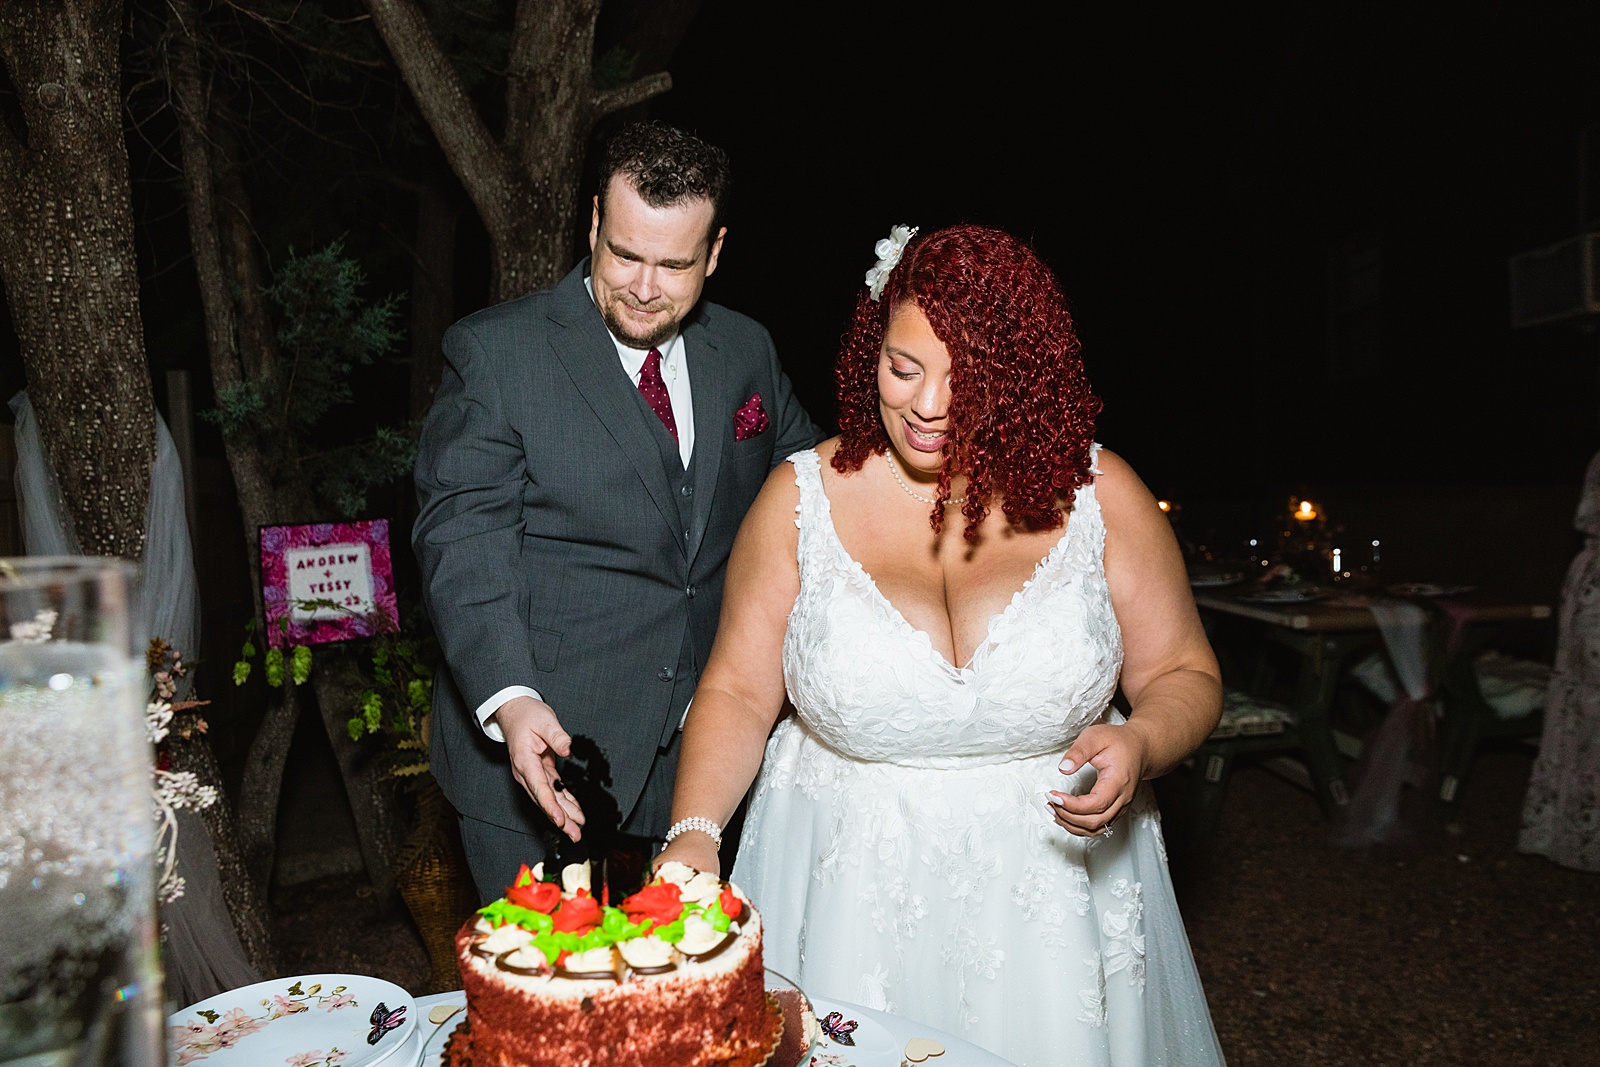 Adventurous elopement couple cutting their wedding cake at their Mogollon Rim wedding reception by Arizona wedding photographer PMA Photography.